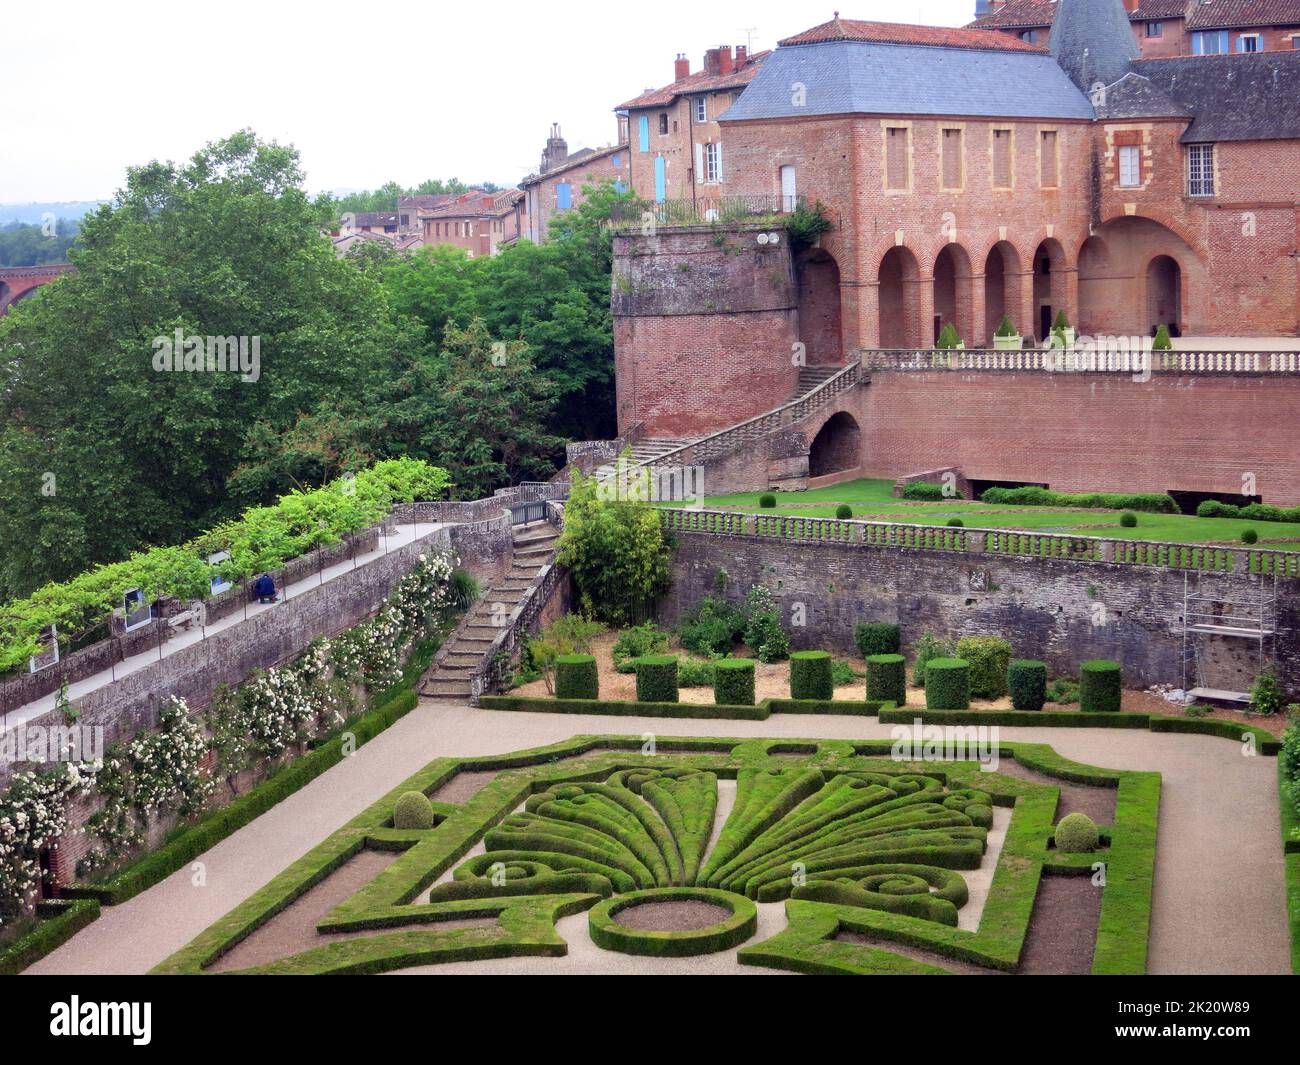 Bishop's Palace garden. Palace of Berbie, Albi, Tarn, France Stock Photo